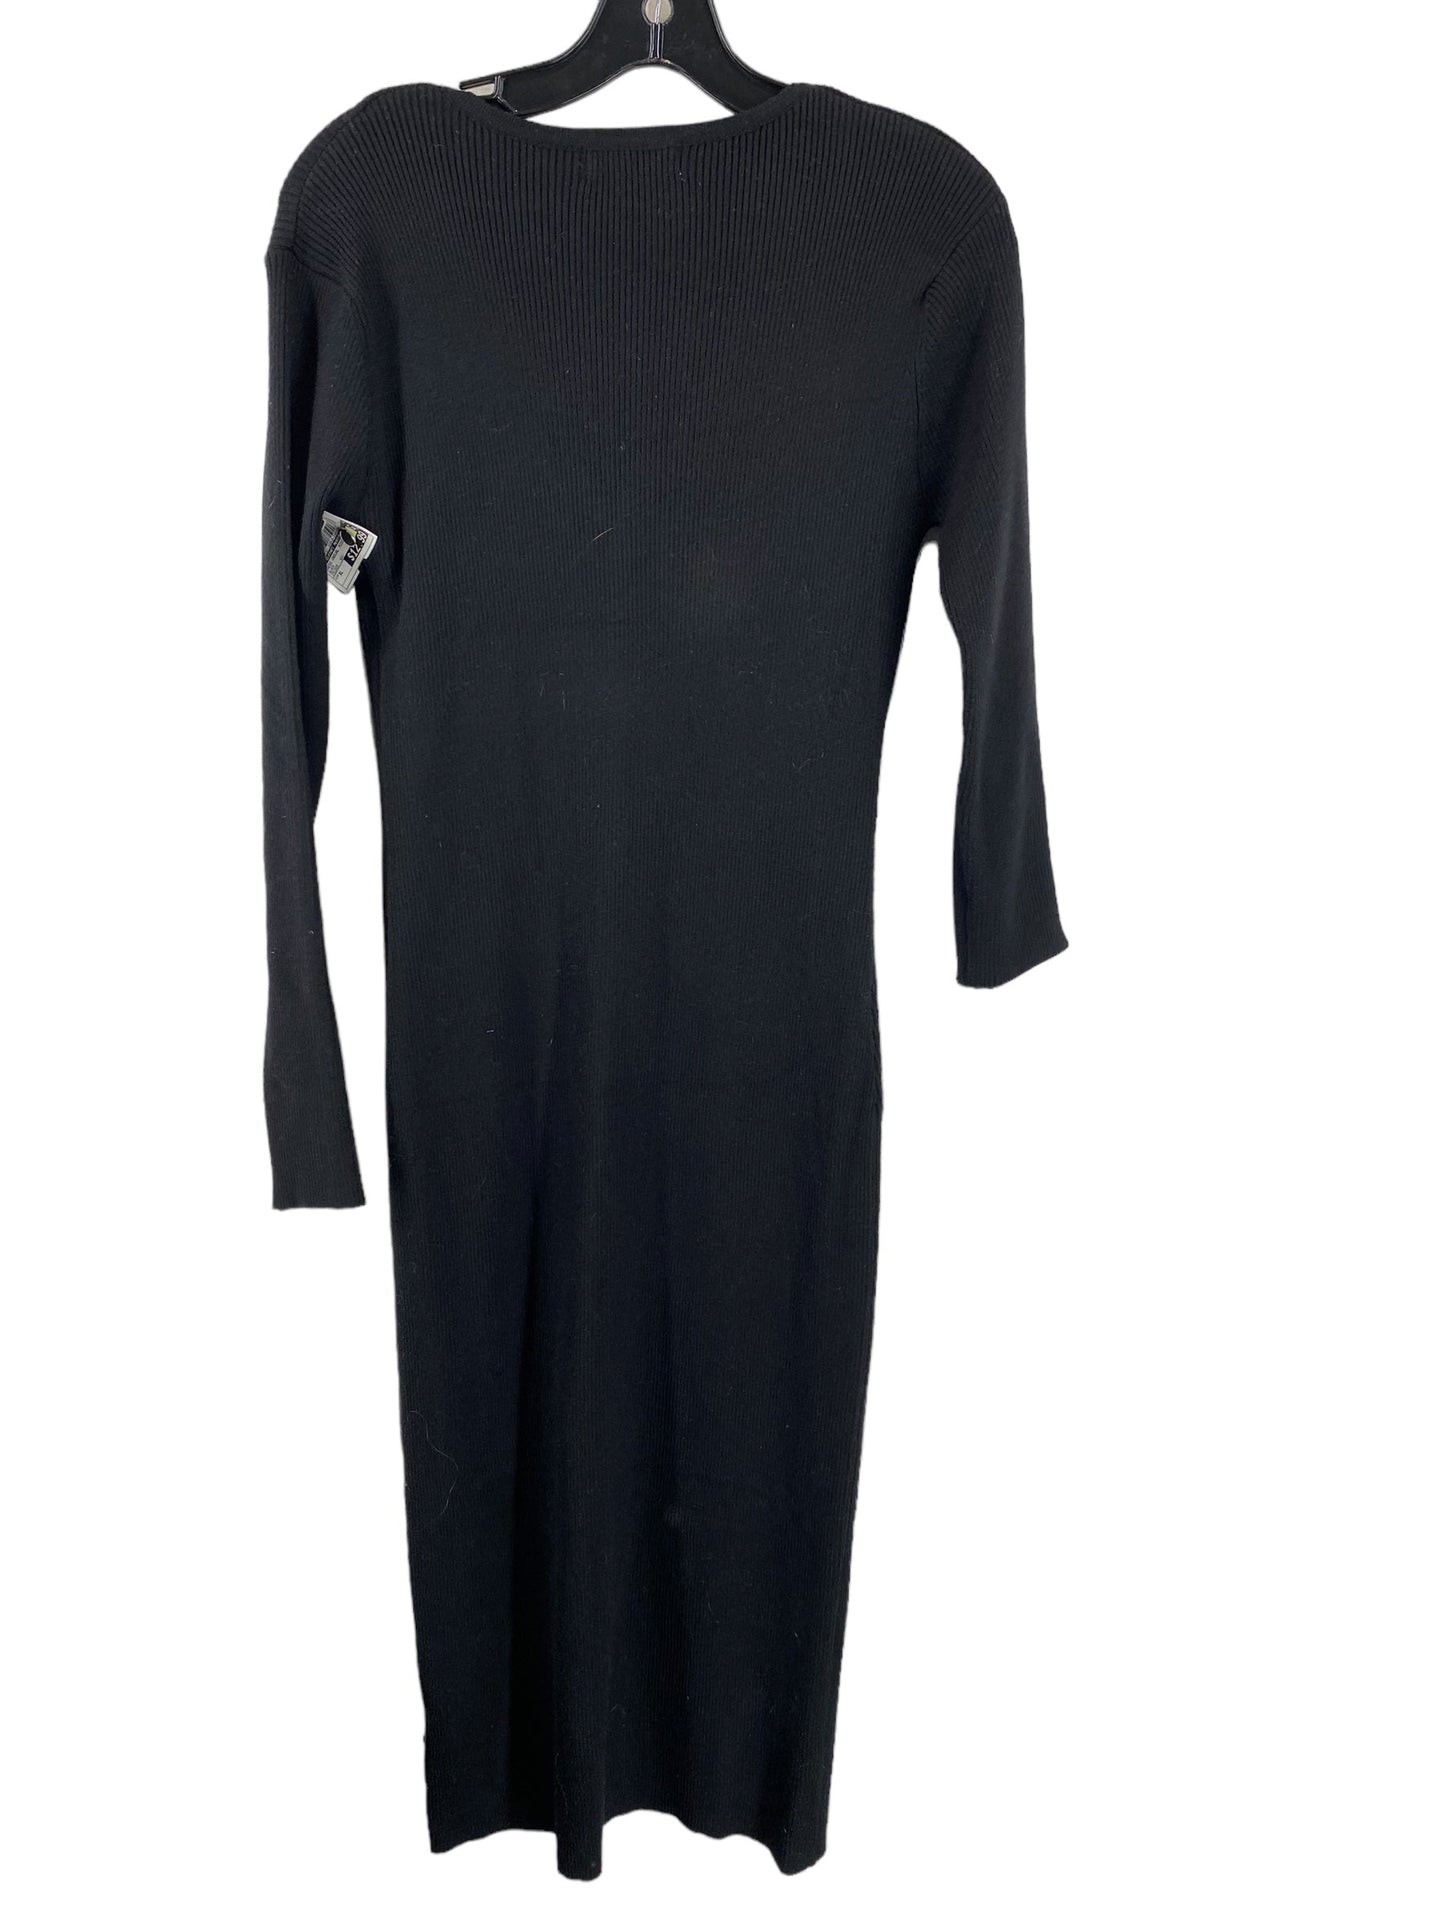 Black Dress Casual Midi Clothes Mentor, Size Xl